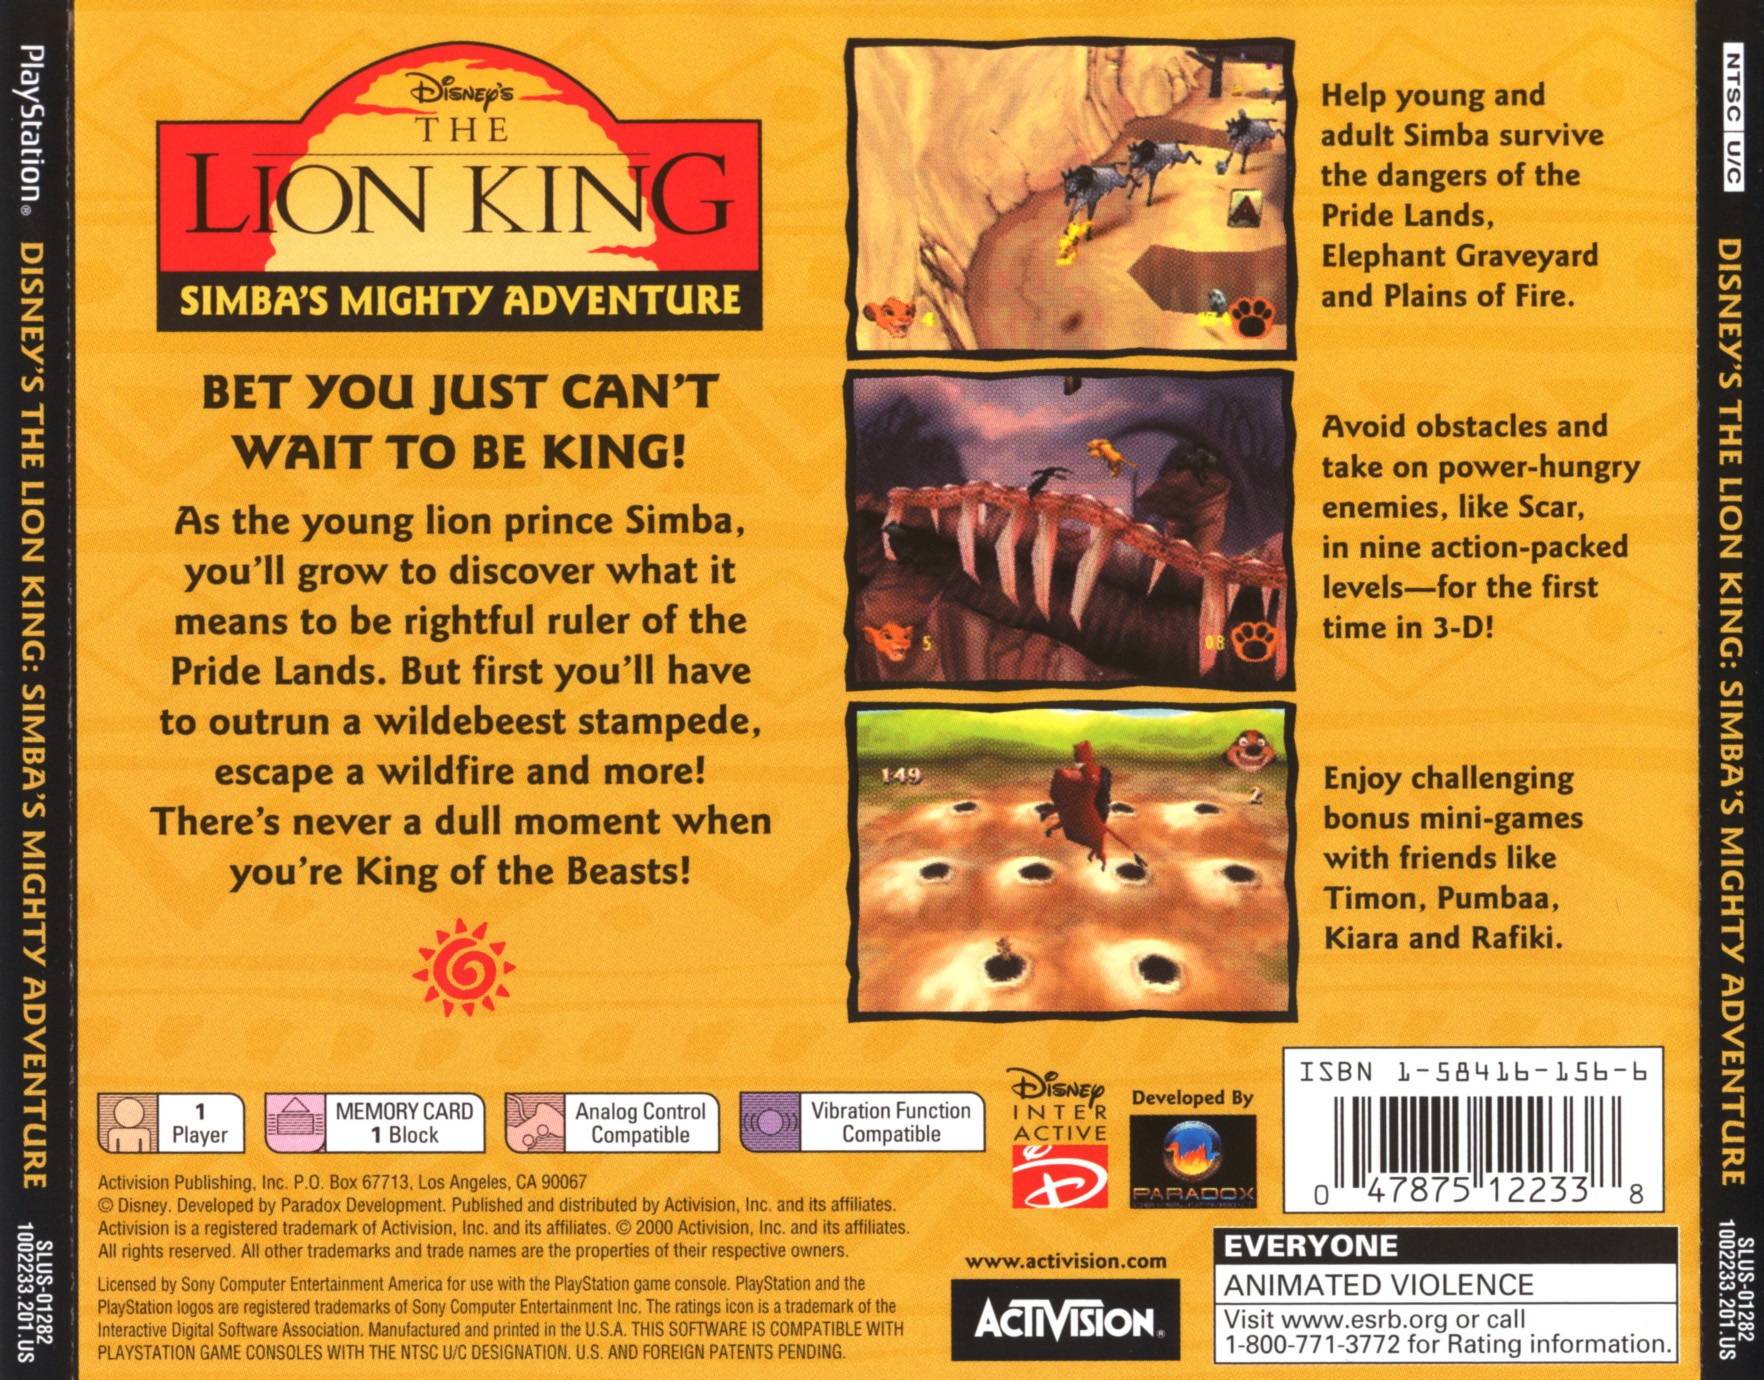 Симба король лев игра. Lion King Sony PLAYSTATION 1. - Simba's Mighty Adventure ps1. Disney's the Lion King: Simba's Mighty Adventure ps1. Disney's the Lion King - Simba's Mighty Adventure ps1 обложка.